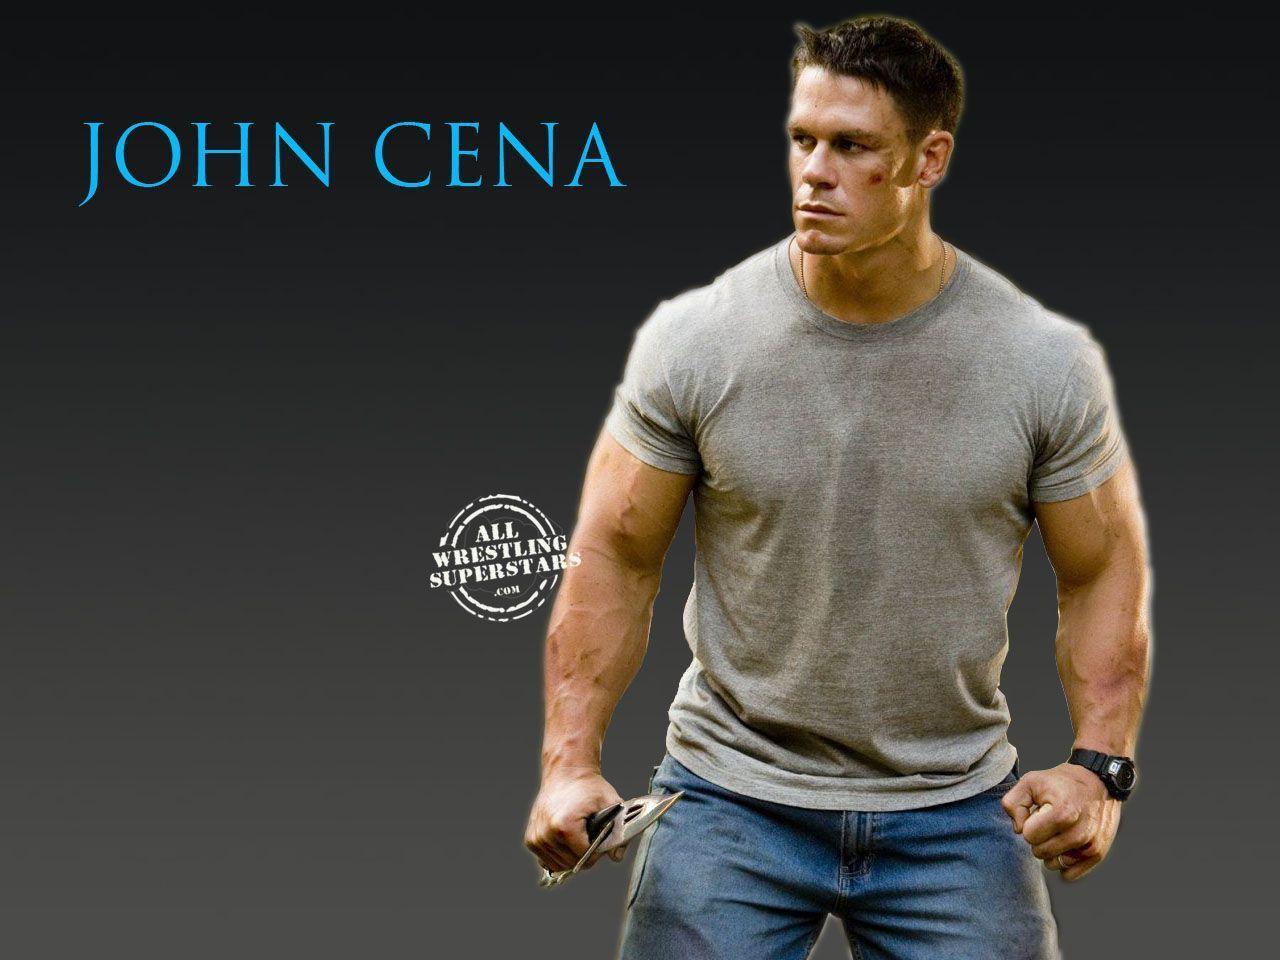 Free Download John Cena 2012 Wallpaper HQ 480P. free download